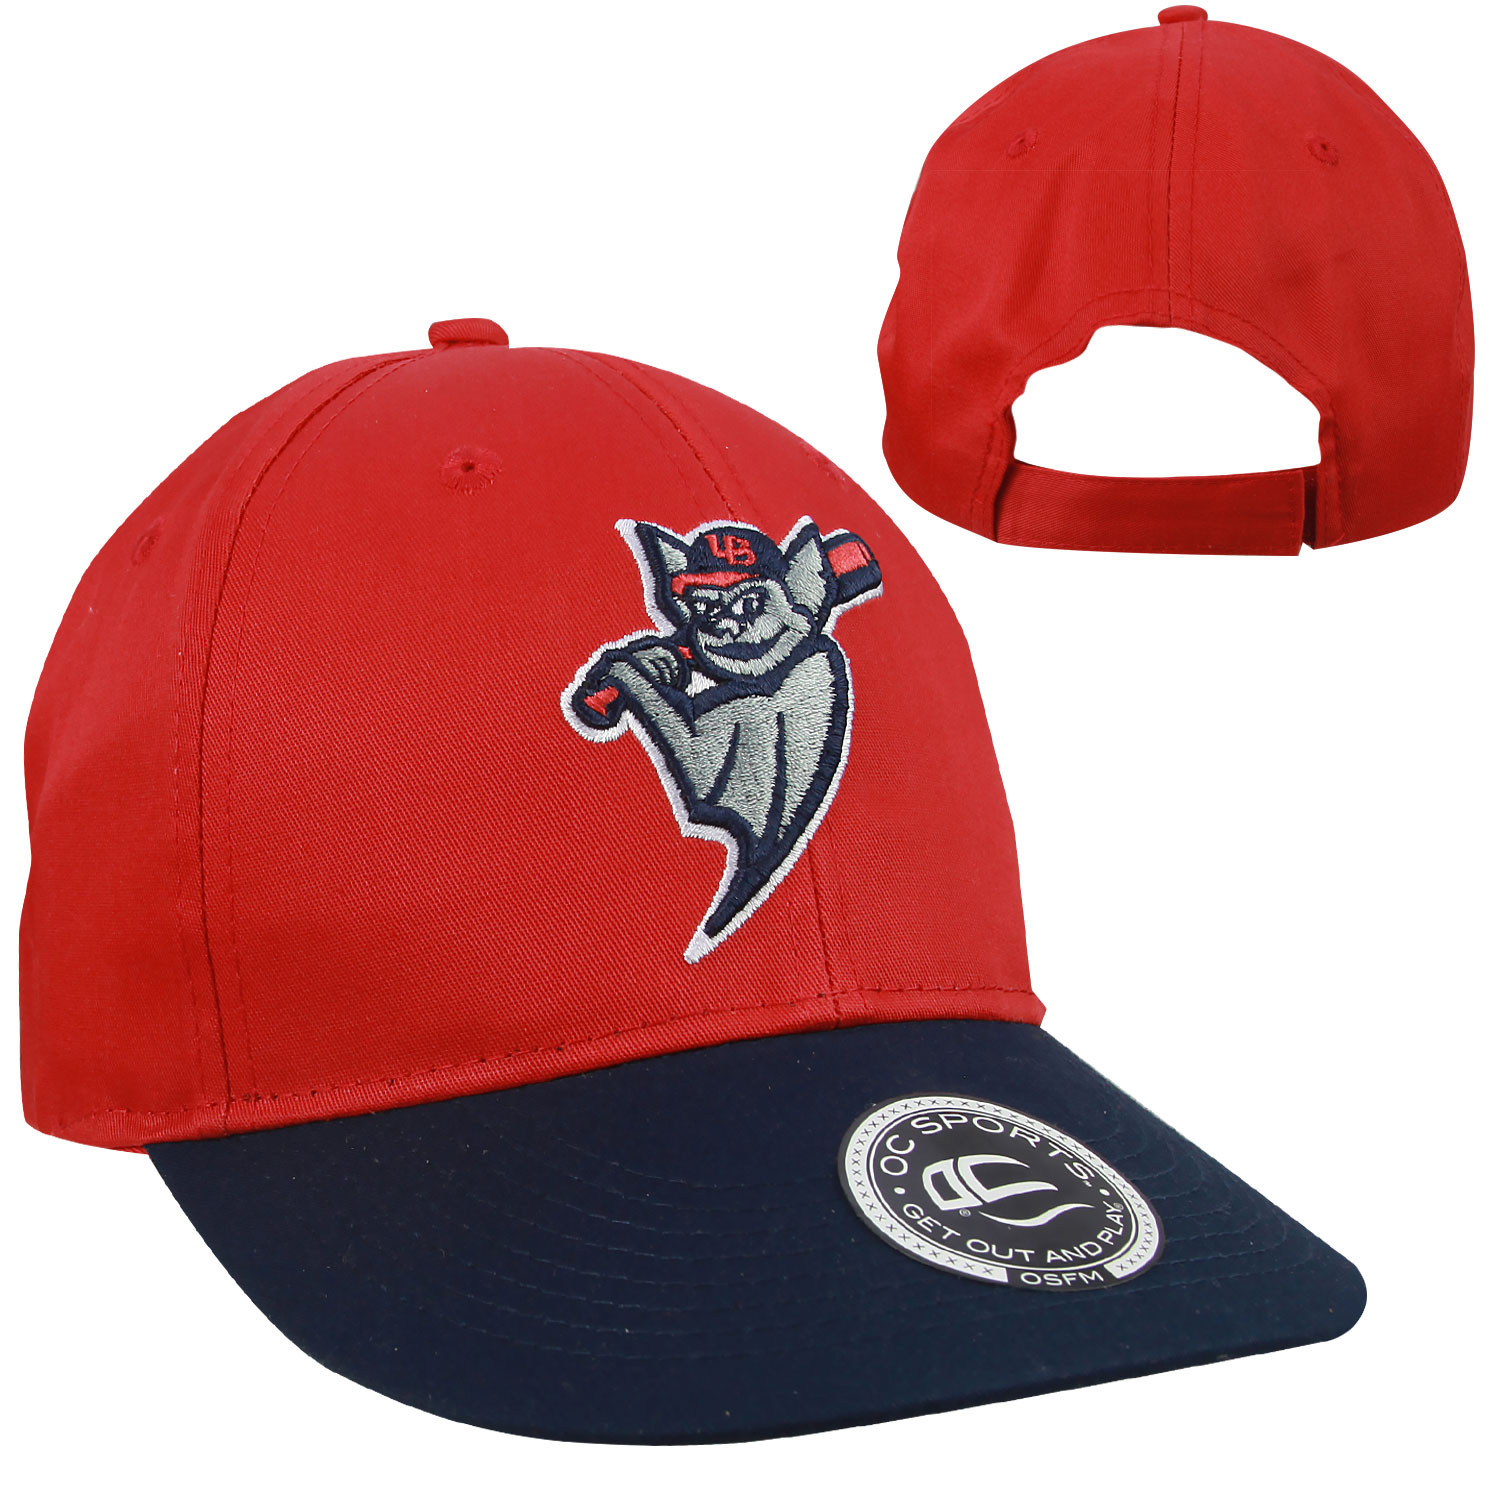 Louisville Bats Baseball Hat Cap MiLB Minor League Cincinnati Reds AAA